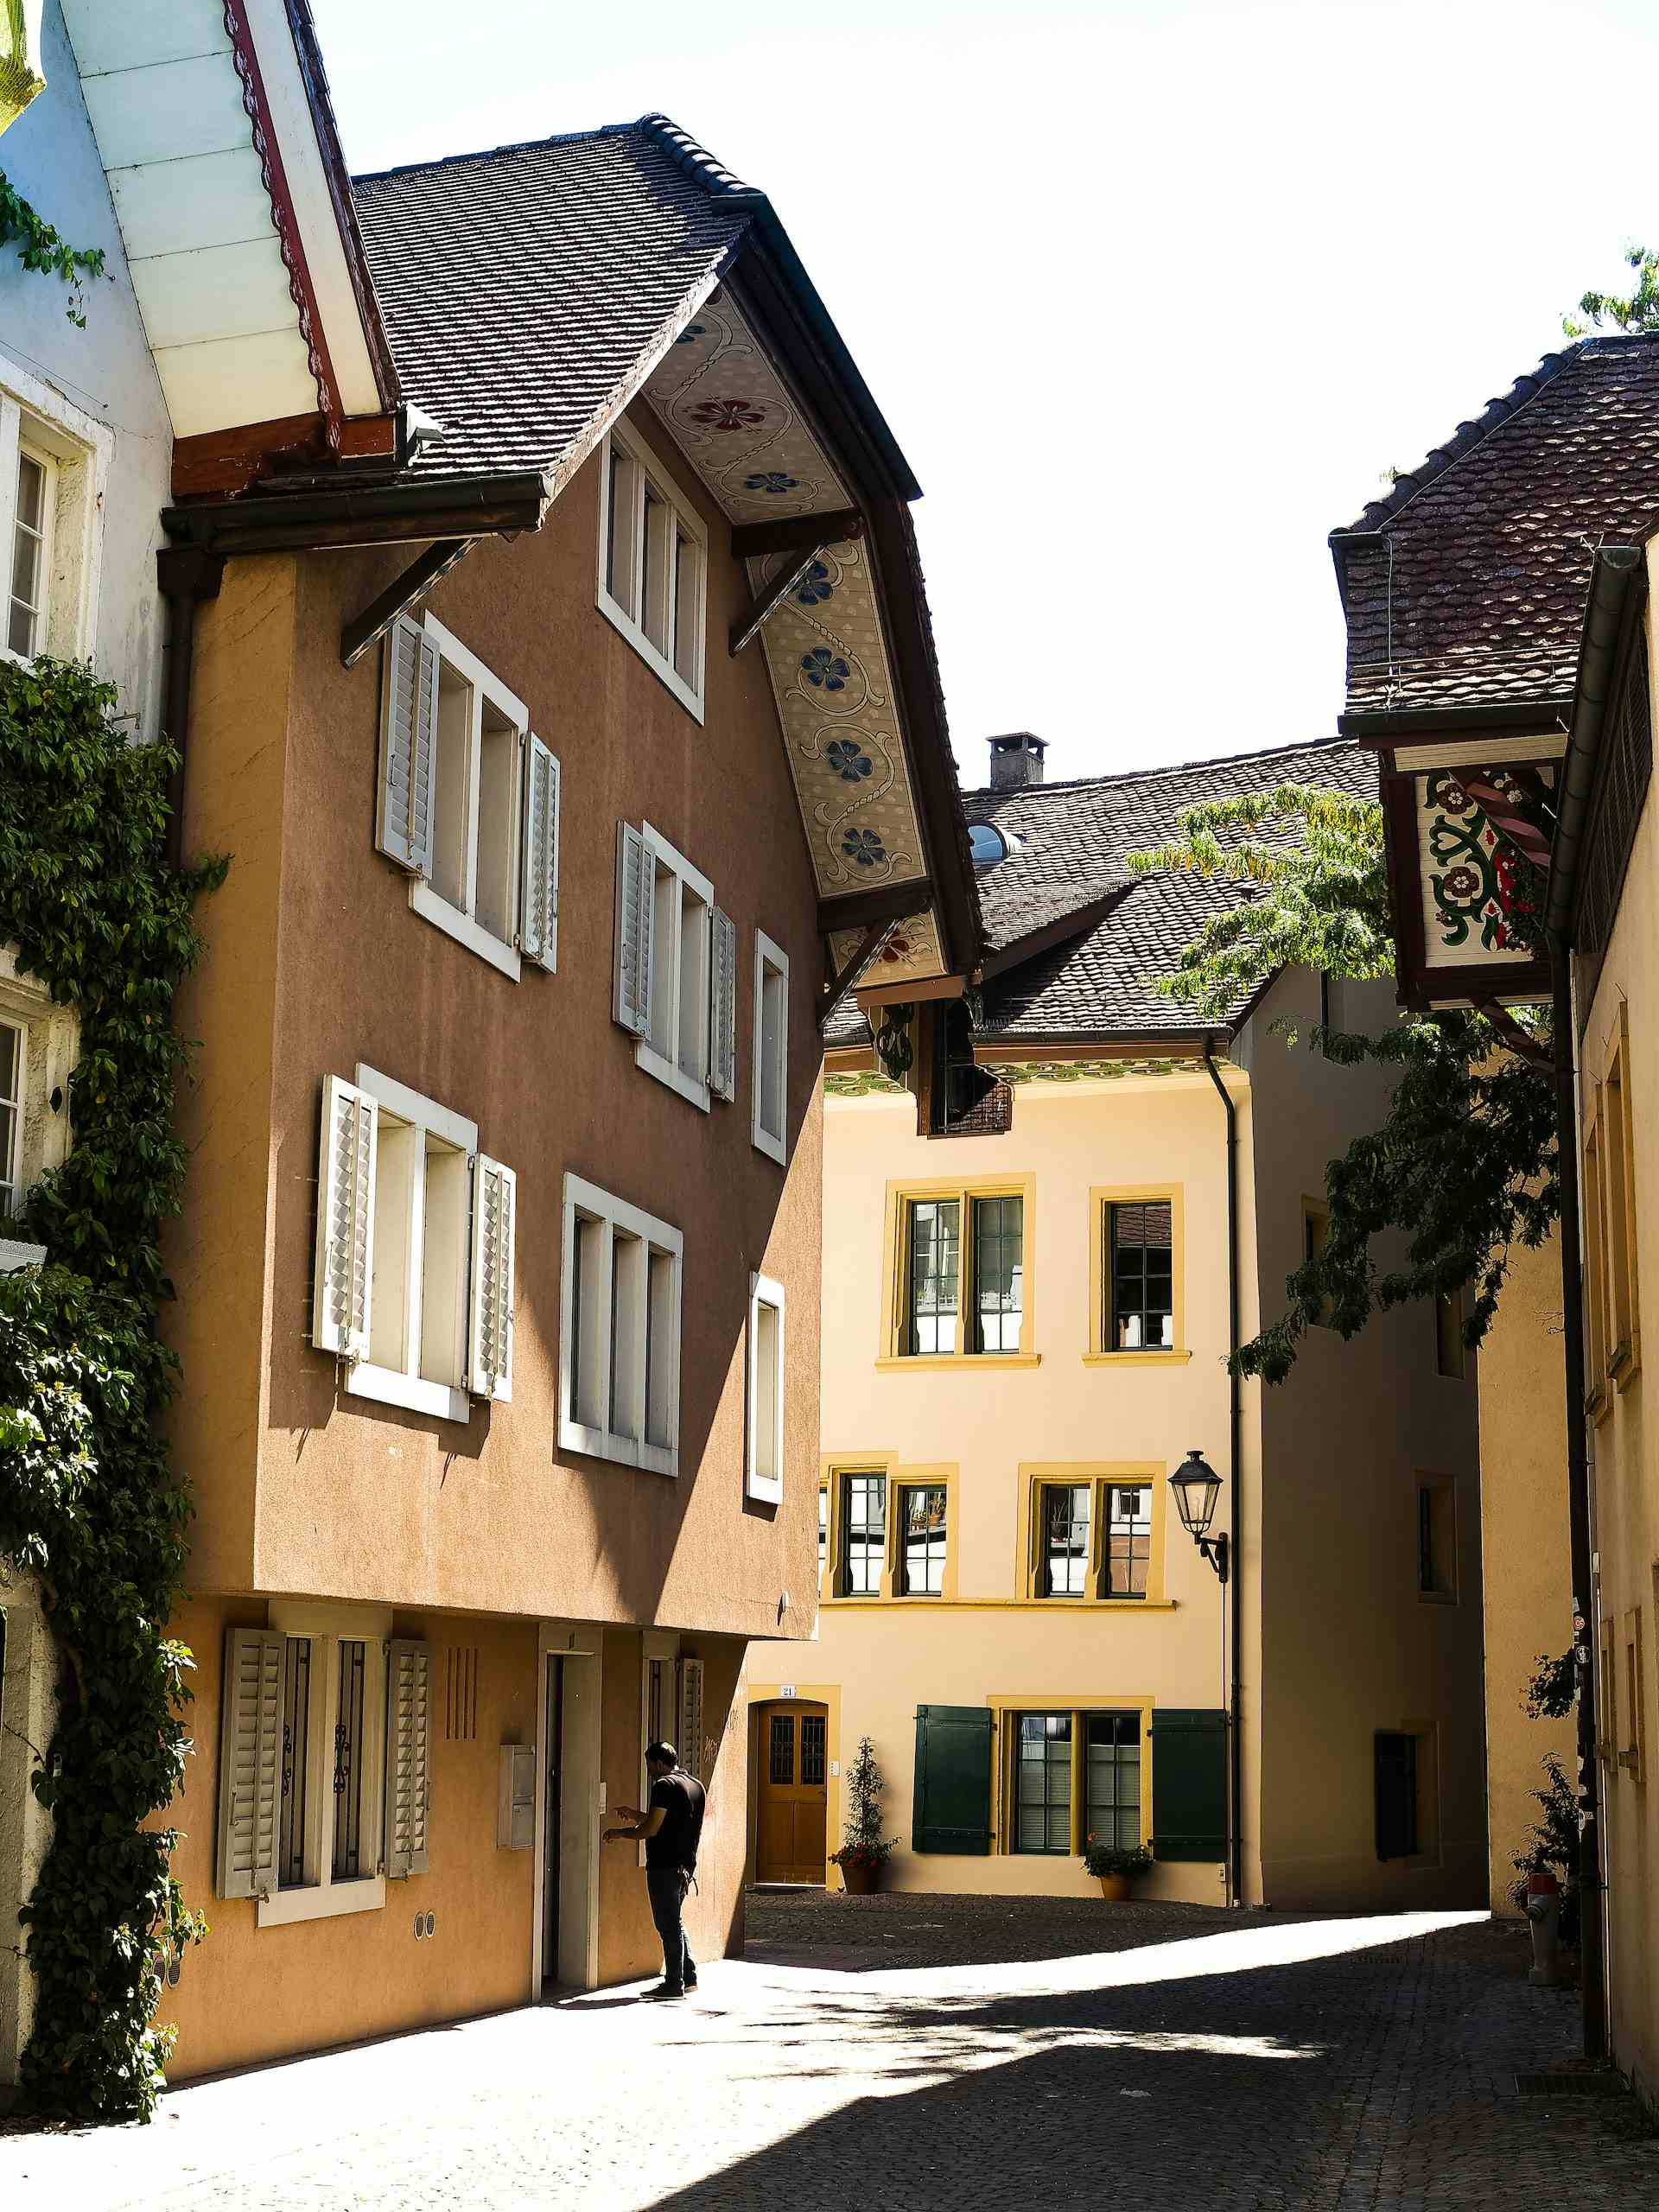 Lehenhof, producer in Rothrist canton of Aargau in Switzerland